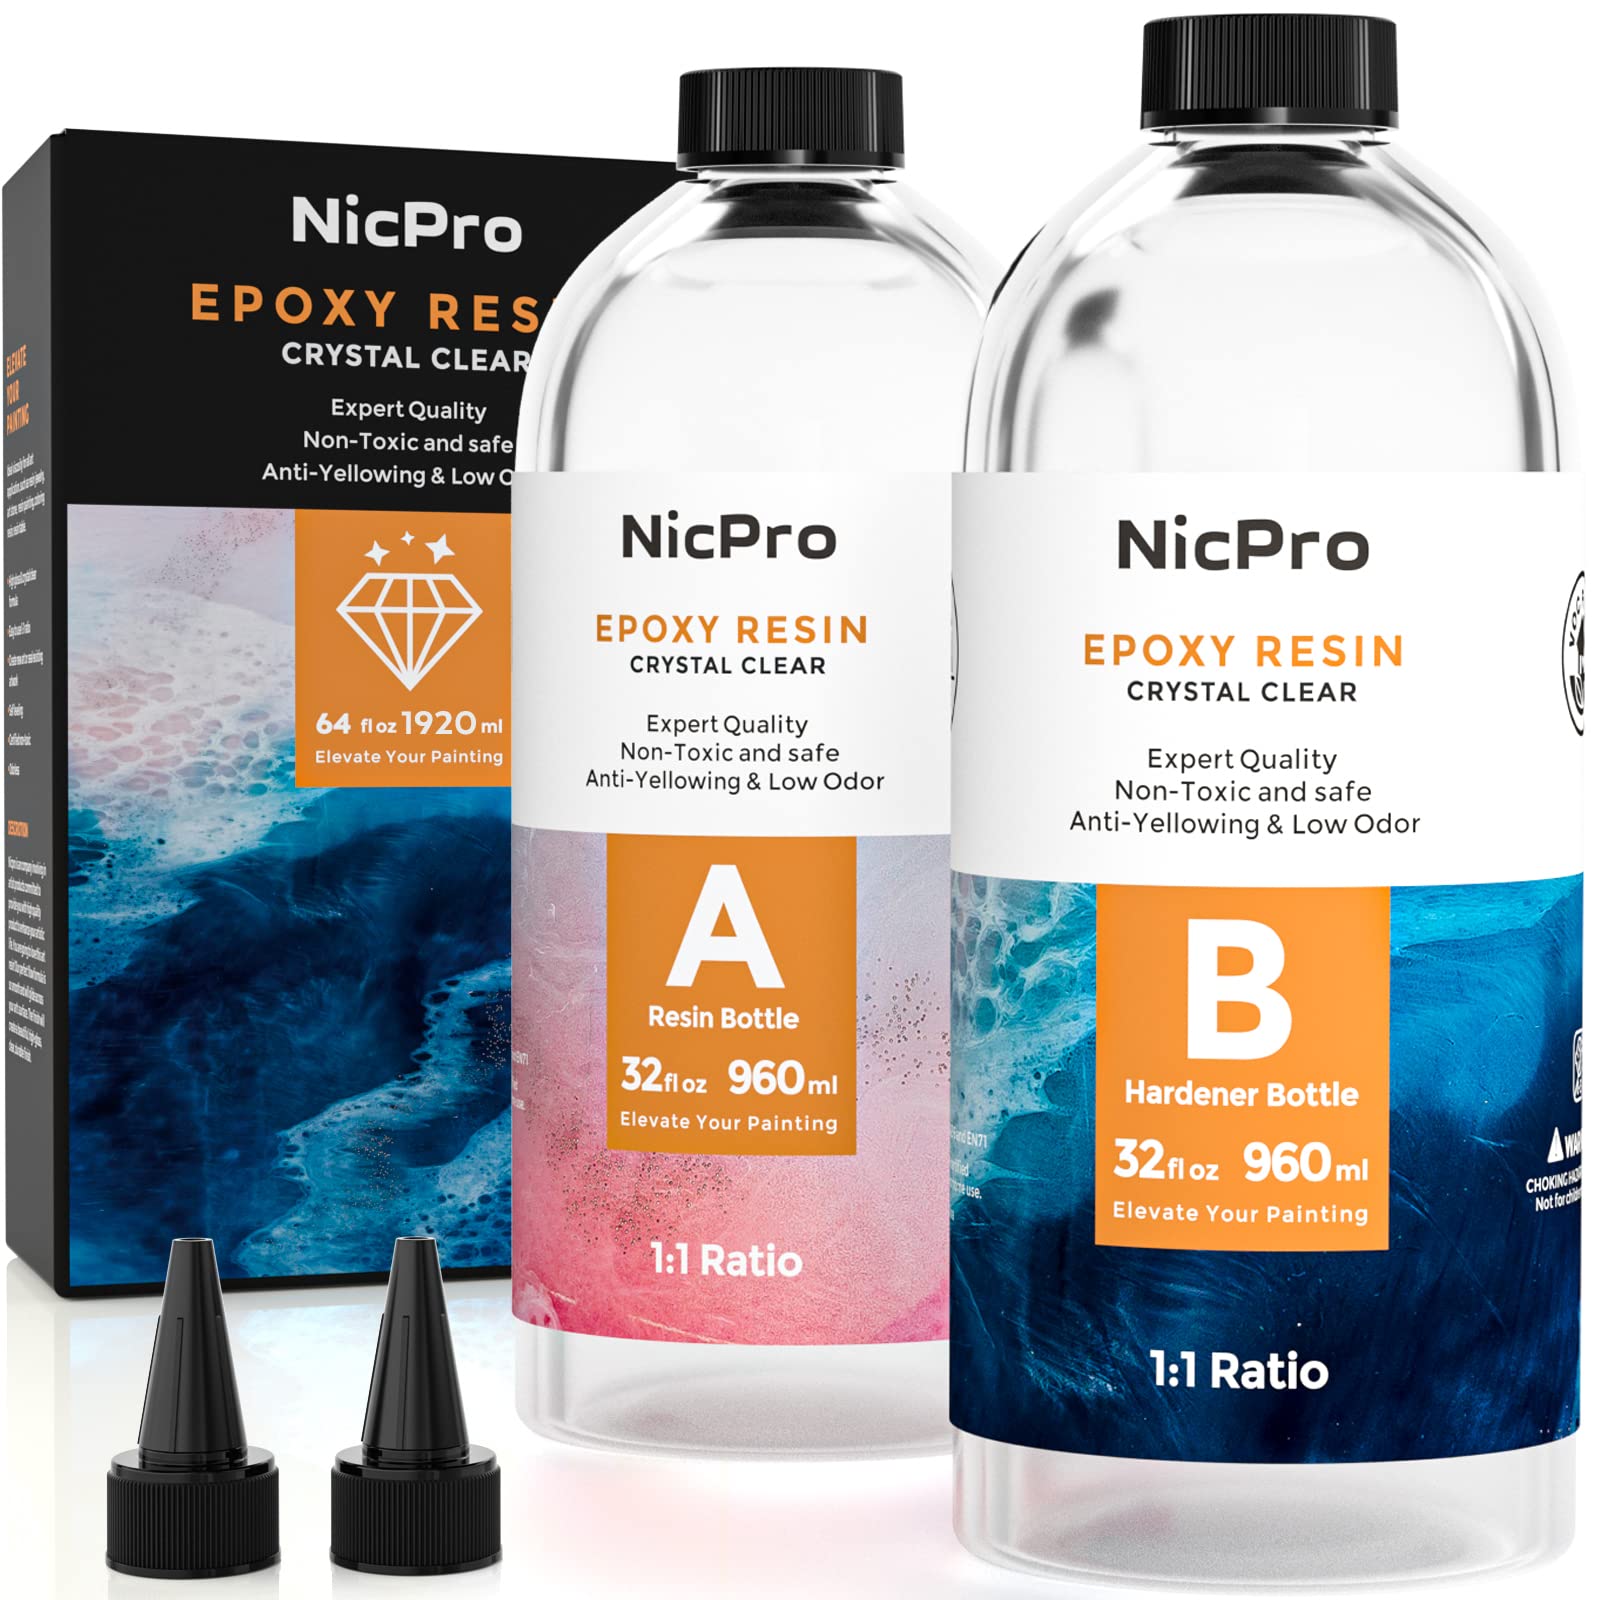  Nicpro 1Gallon Crystal Clear Epoxy Resin Kit + 2 PCS